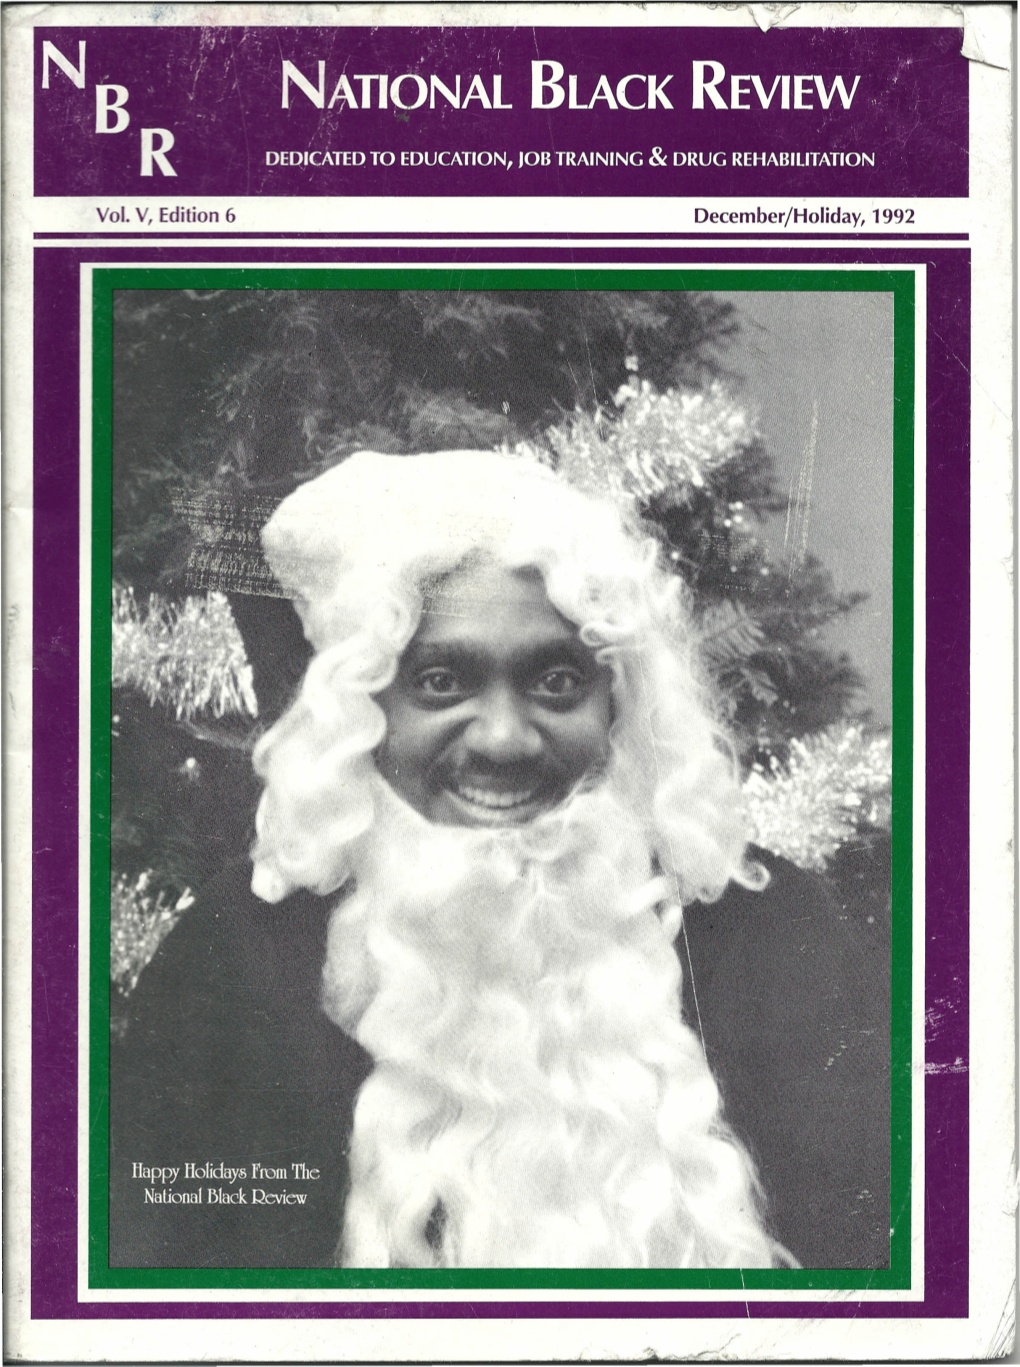 Vol. I Edition 6 December/Holiday, 1992 UPI/Bettmann Newsphotos